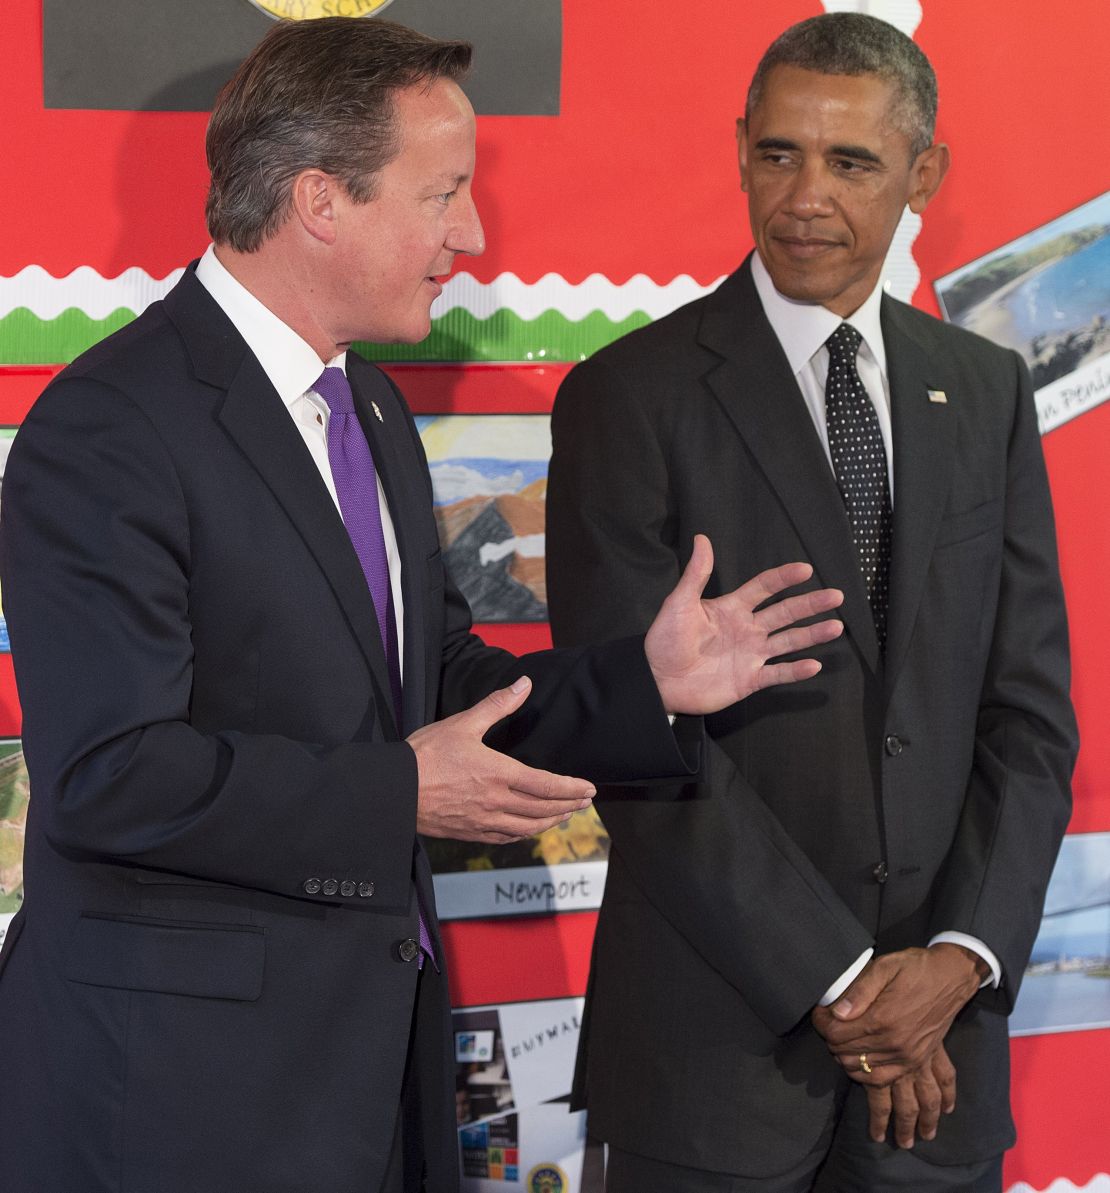 British Prime Minister David Cameron and U.S. President Barack Obama